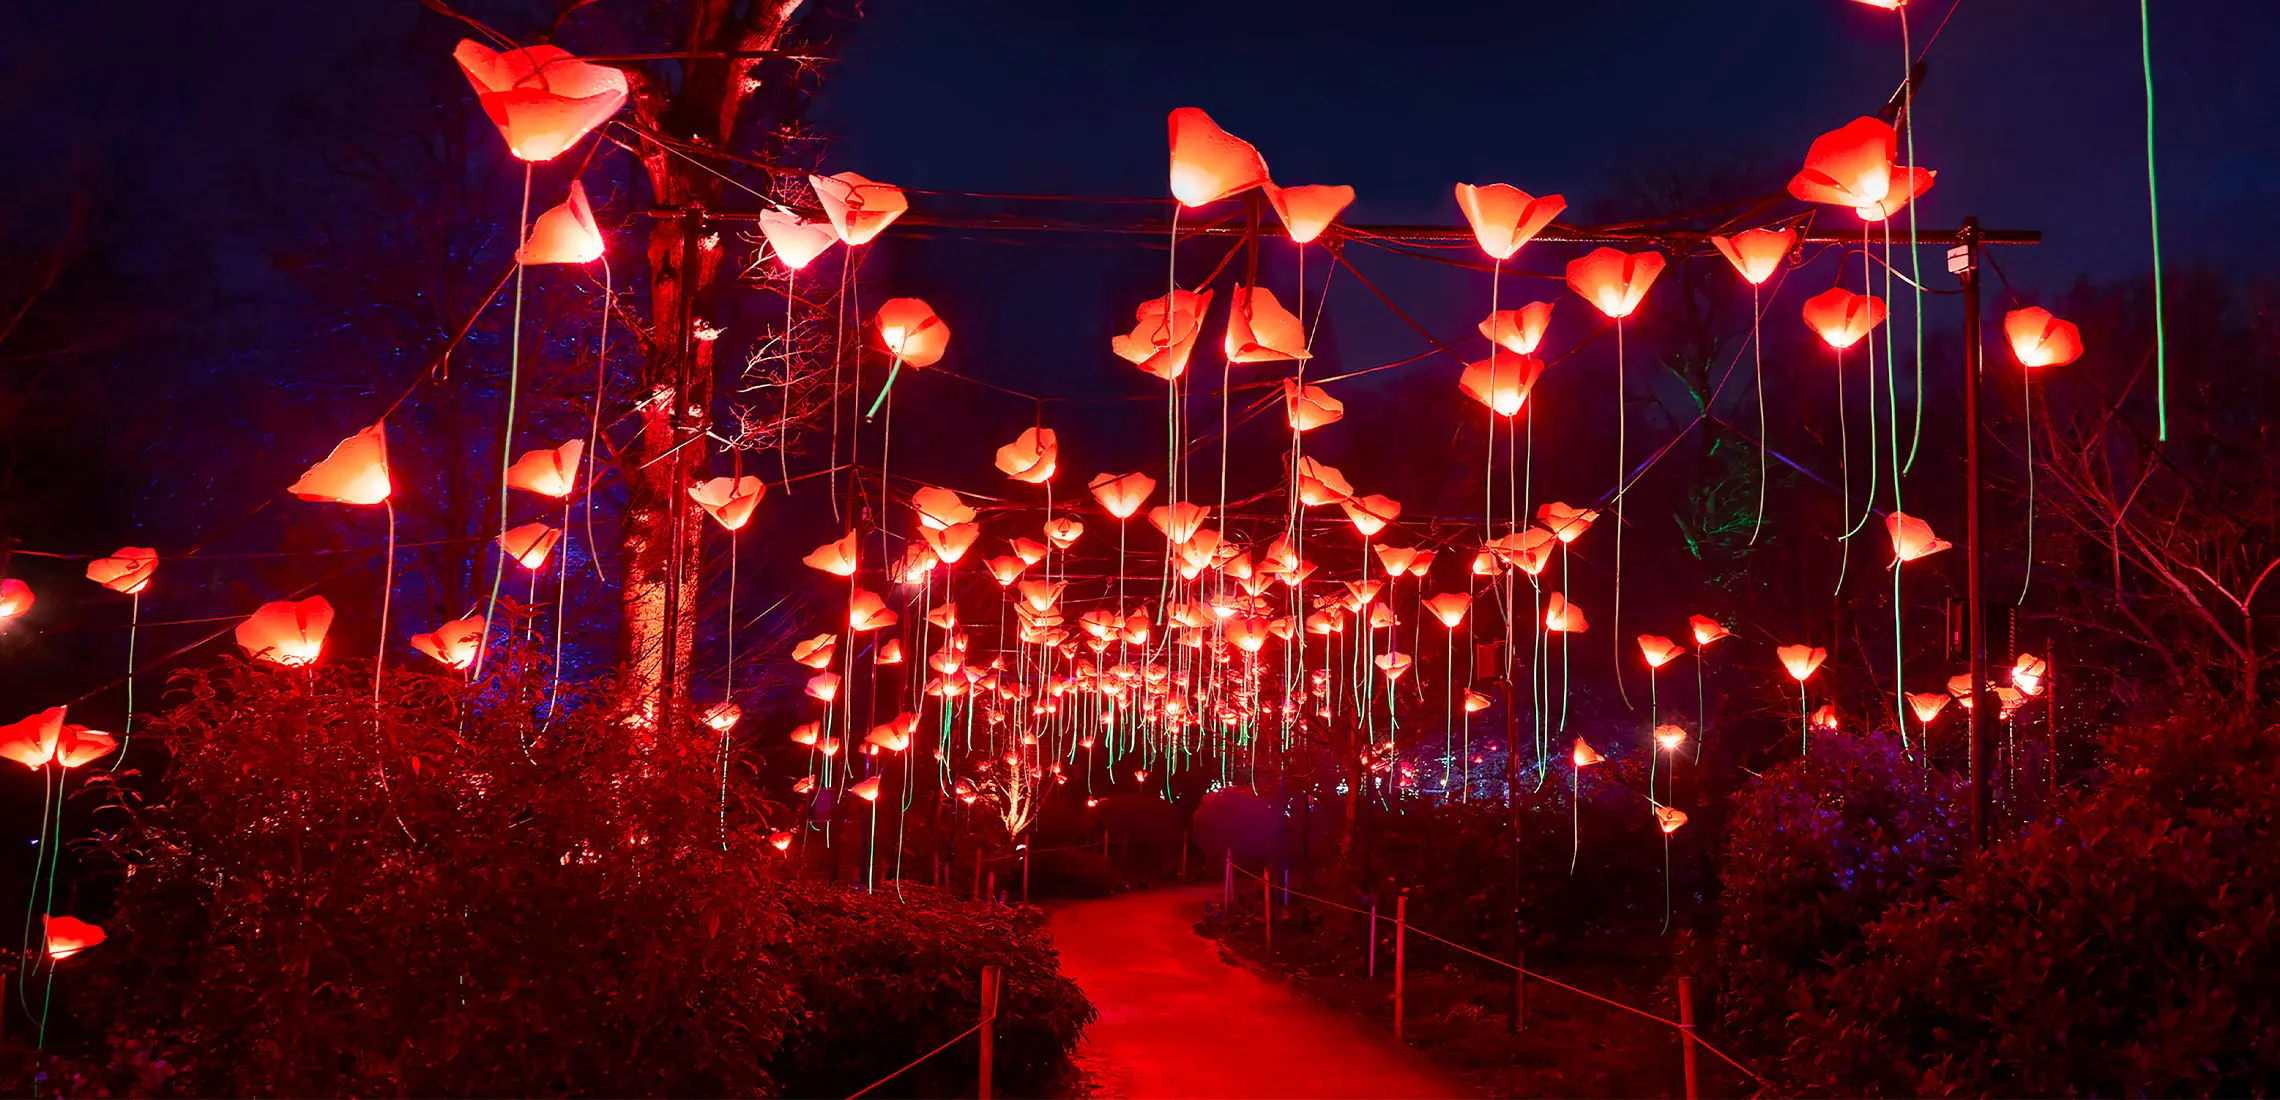 Header - Bright lights in the city botanic gardens